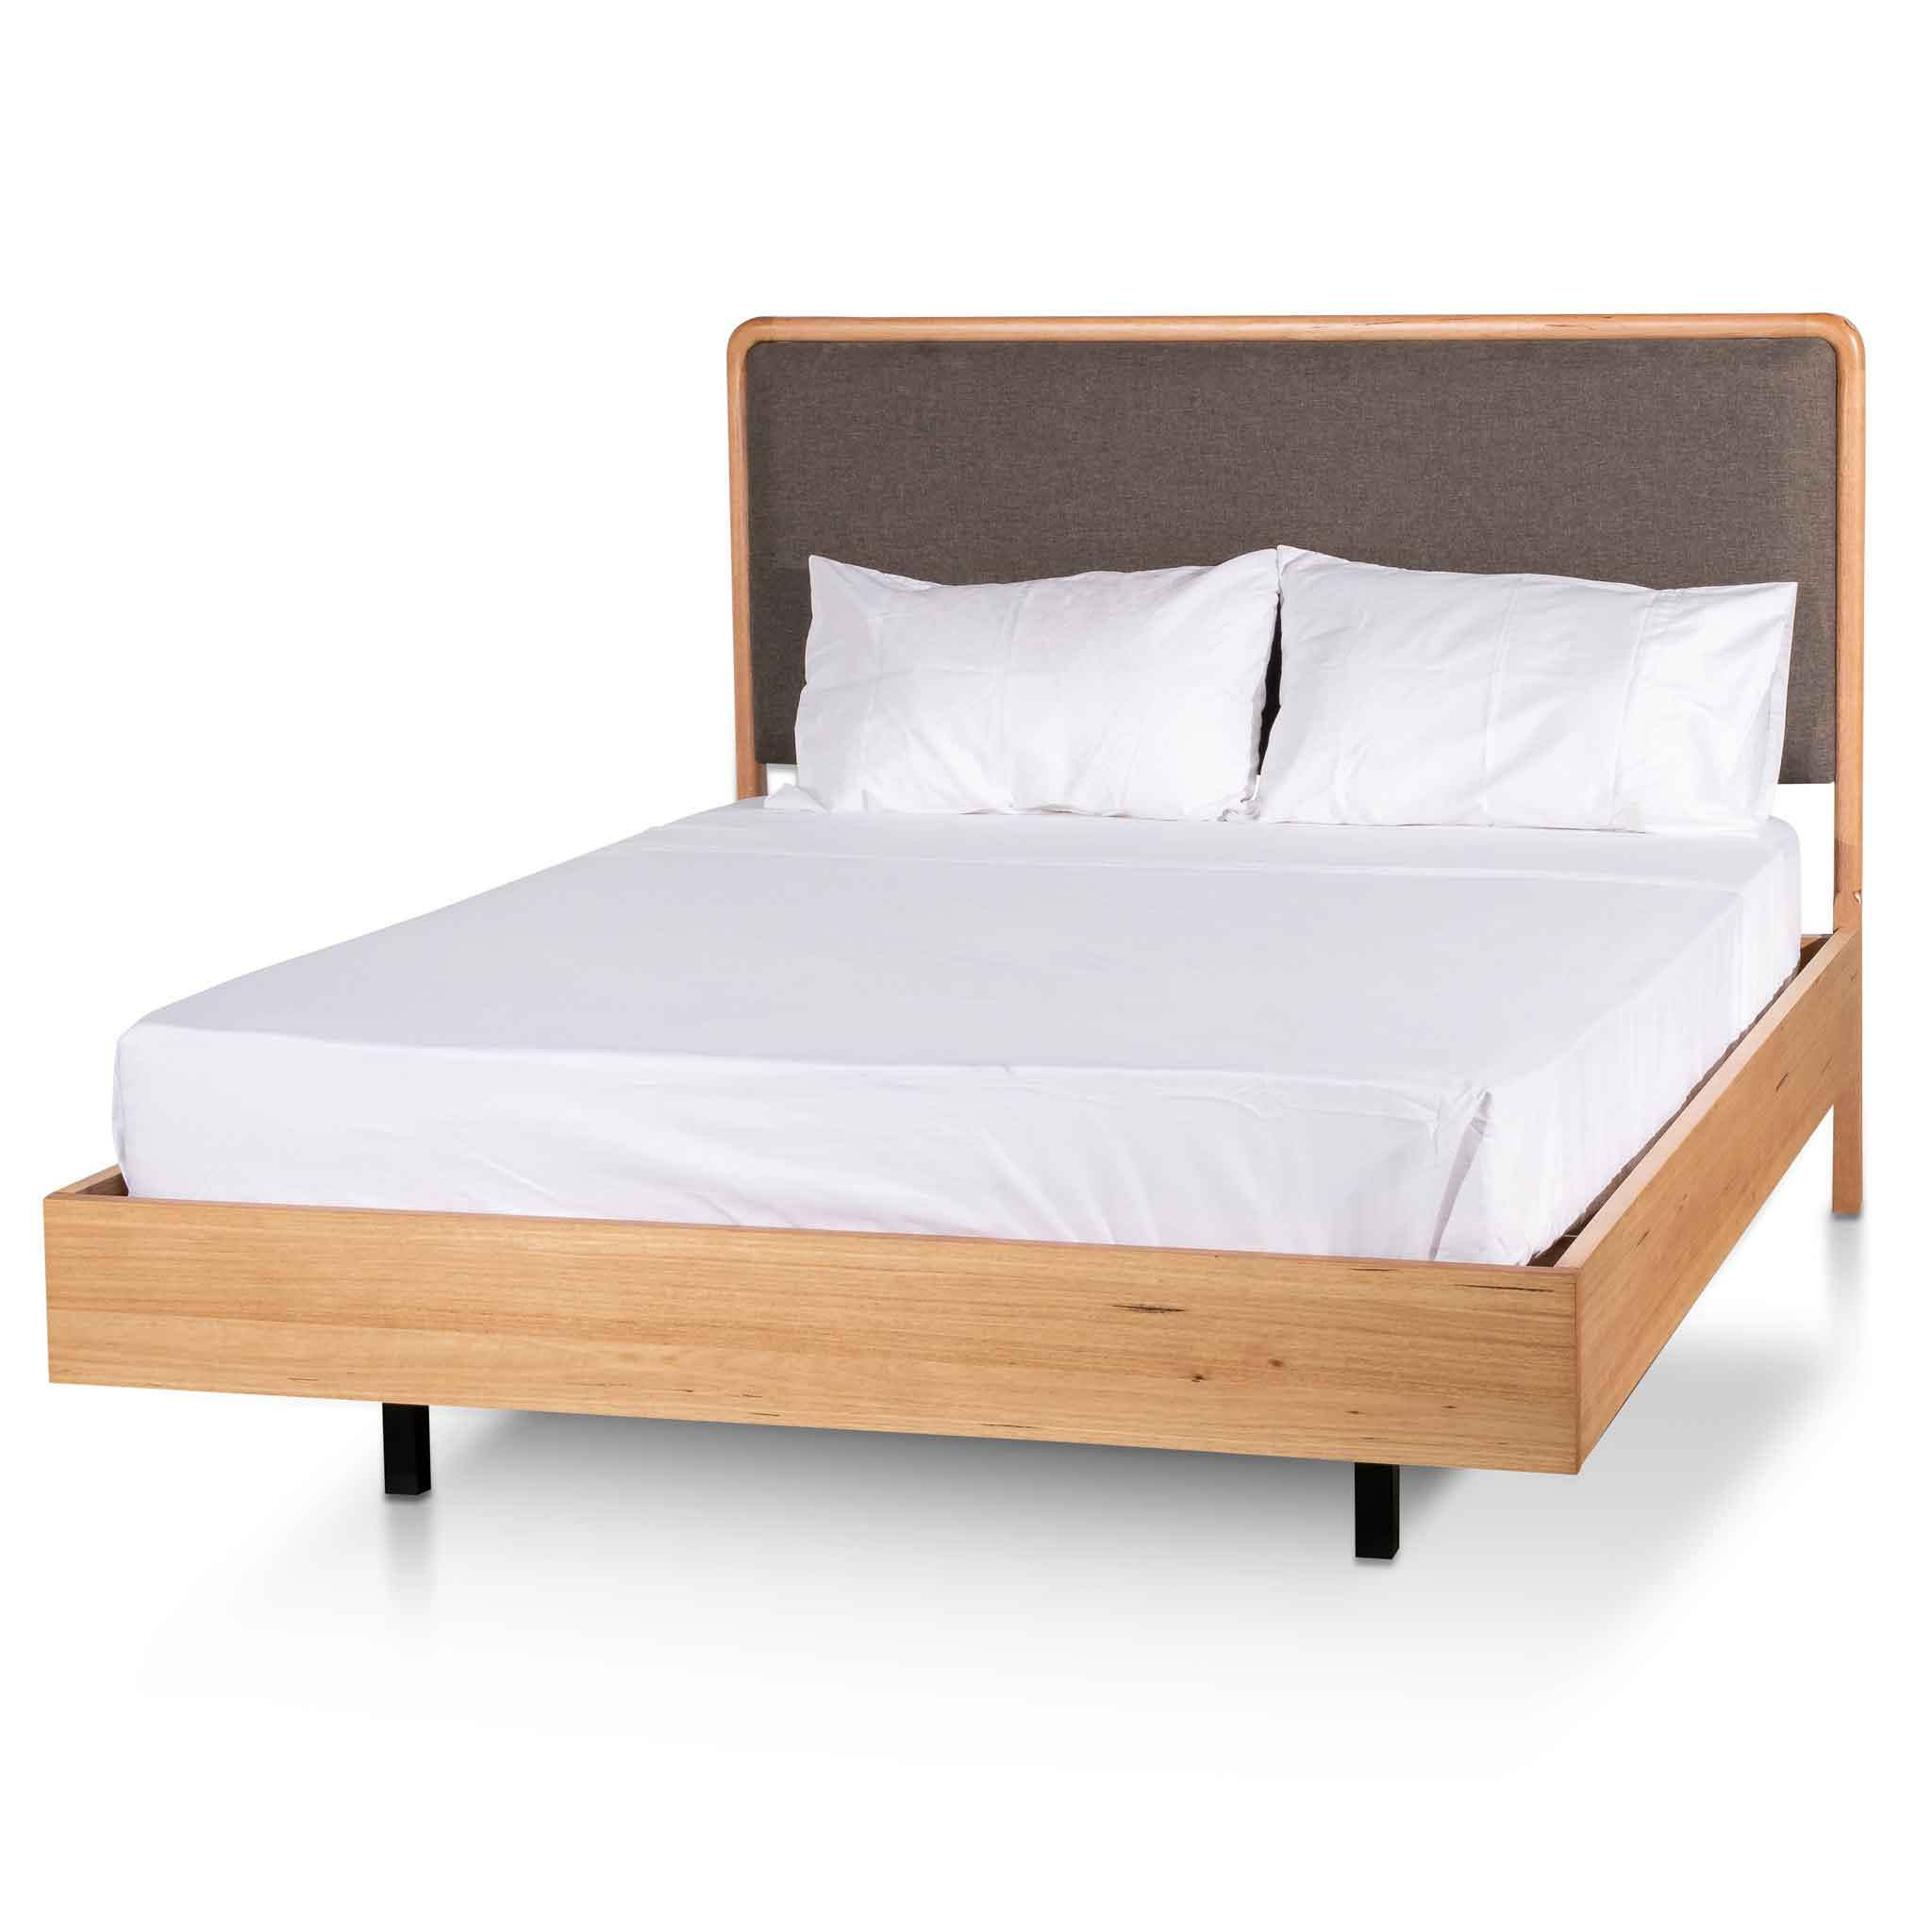 Milo Queen Bed Frame - Messmate - Beds